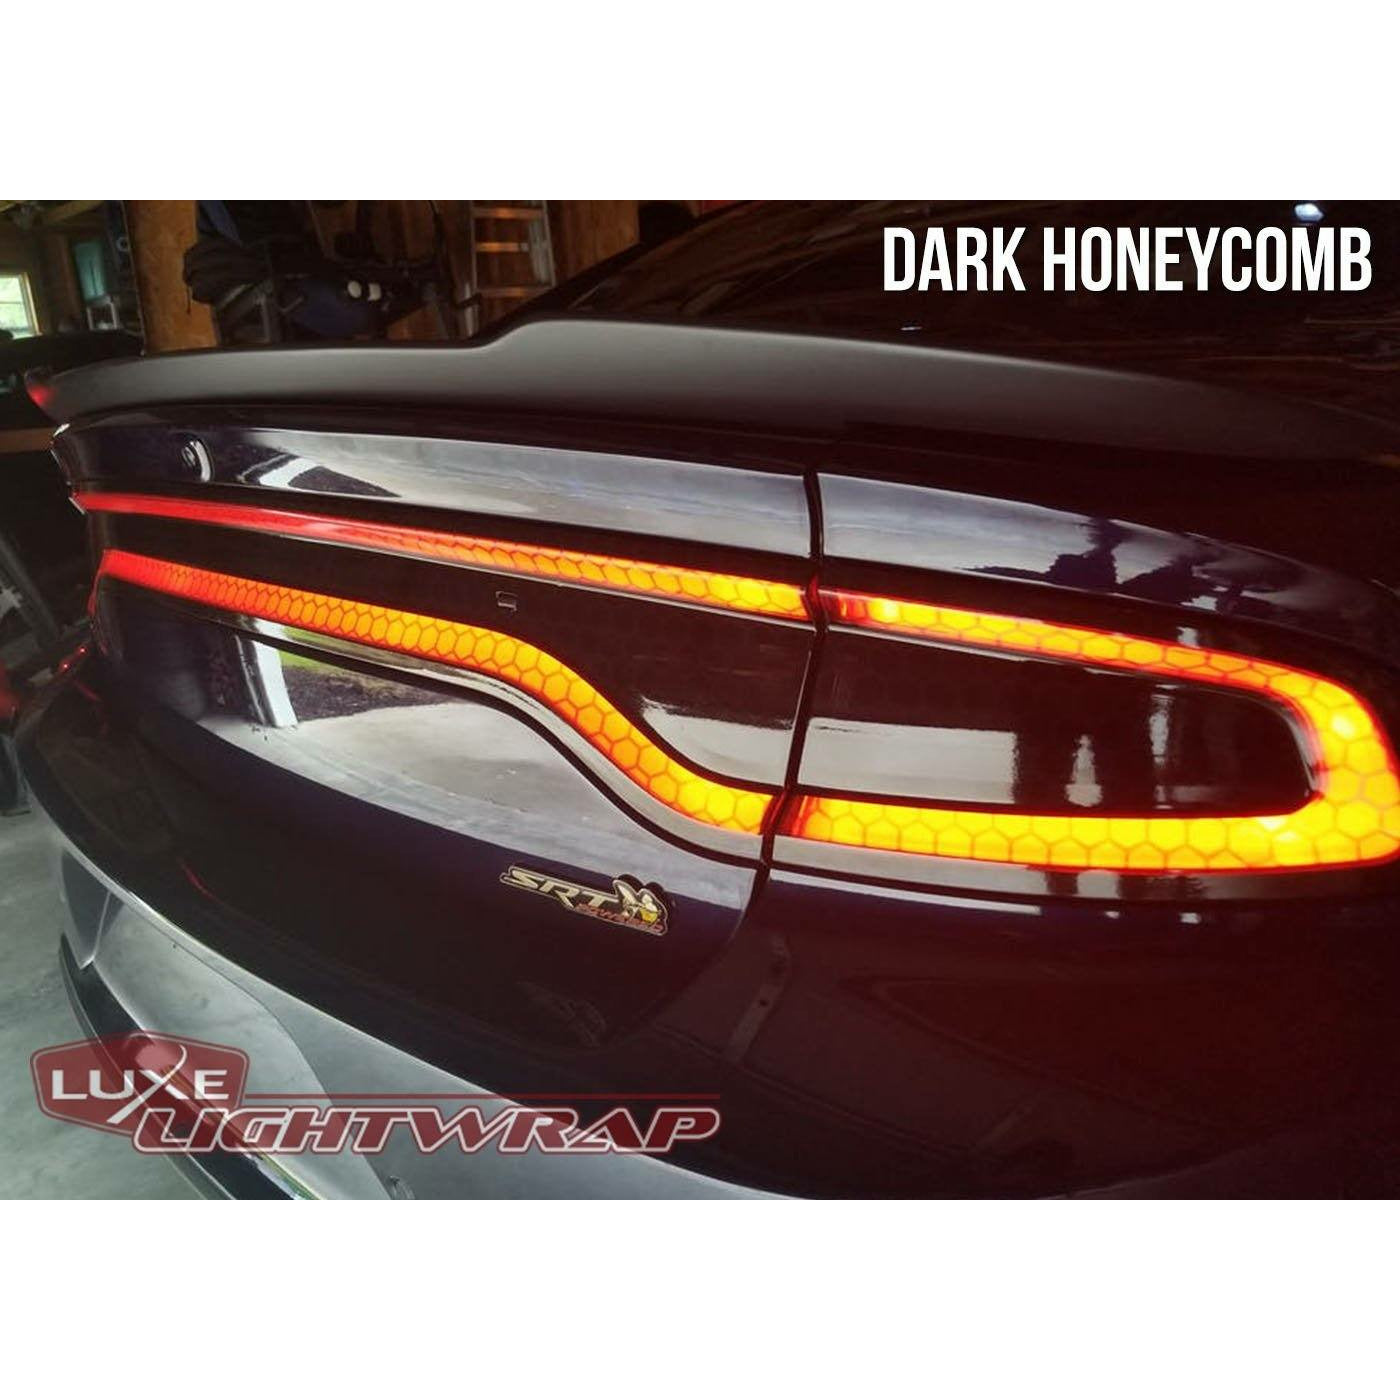 Luxe LightWrap - FX Dark Honeycomb - LightWrap